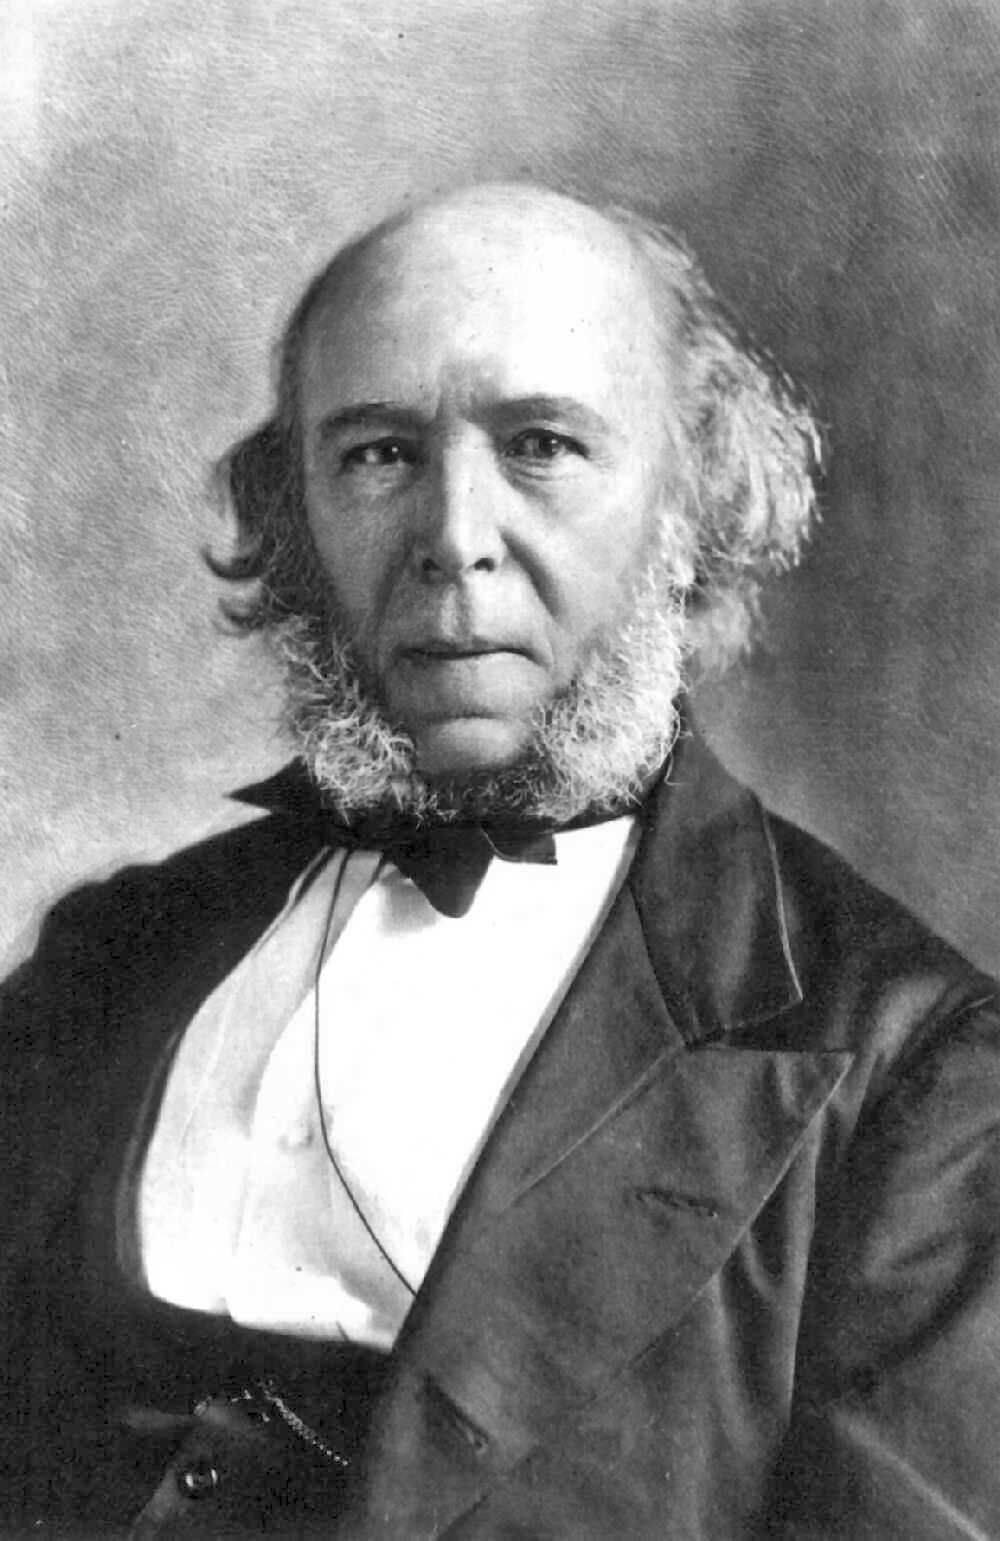 English philosopher Herbert Spencer (April 27, 1820 - December 8, 1903).